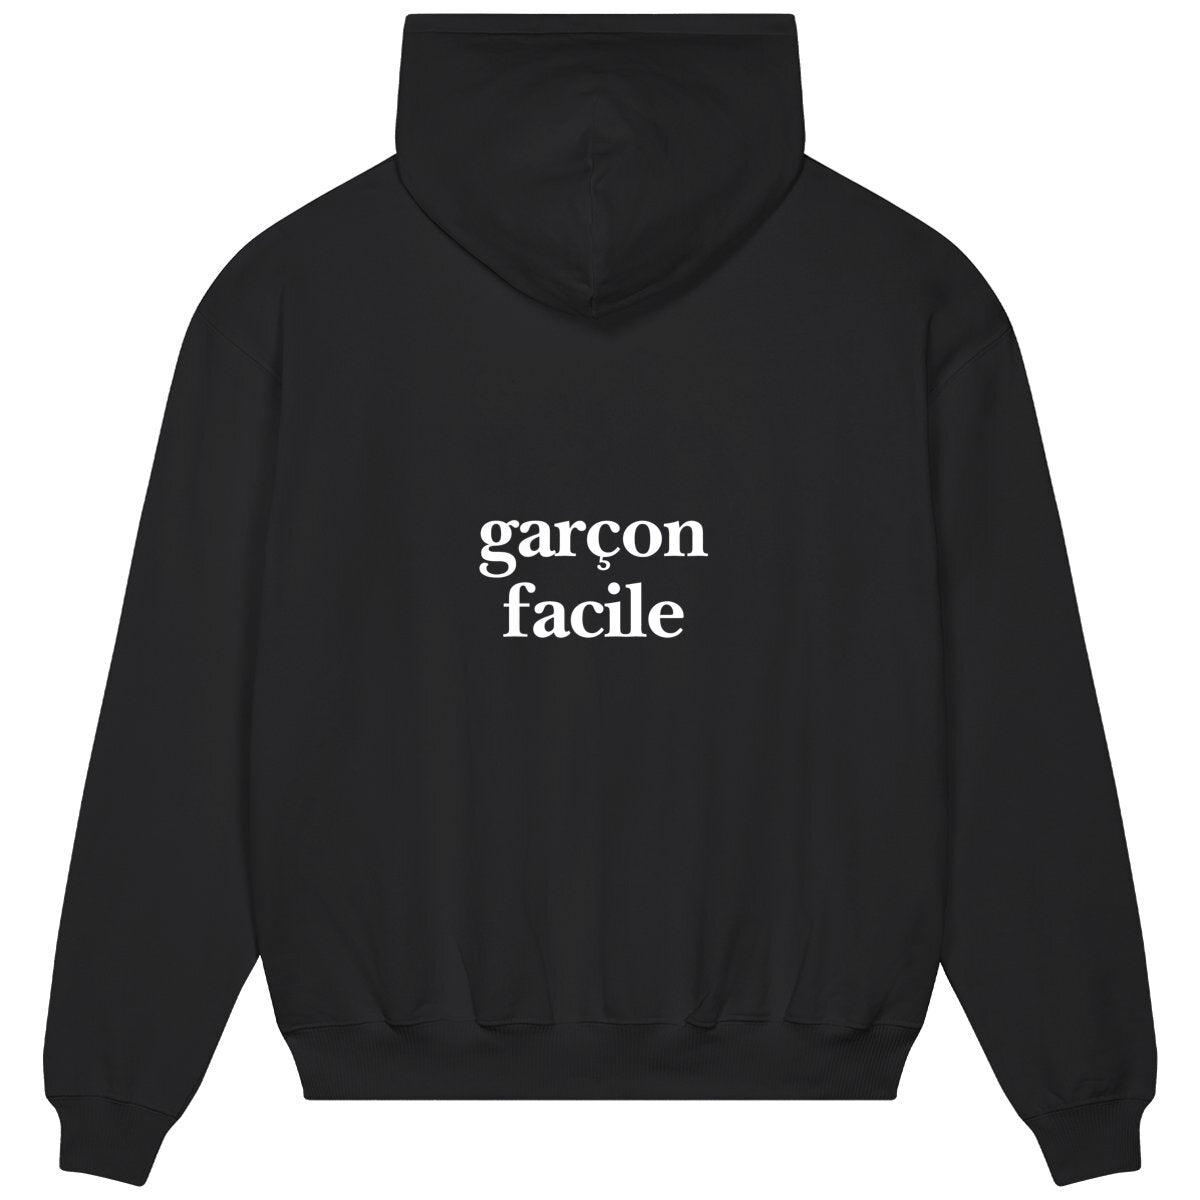 garçon facile hoodie over. garçon garçon essentiel black oversized hoodie. Encapsulate effortless Parisian cool with this hoodie, its subtle 'garçon facile ON THE BACK' emblem whispering understated sophistication. Crafted for comfort, styled for streets of Paris.